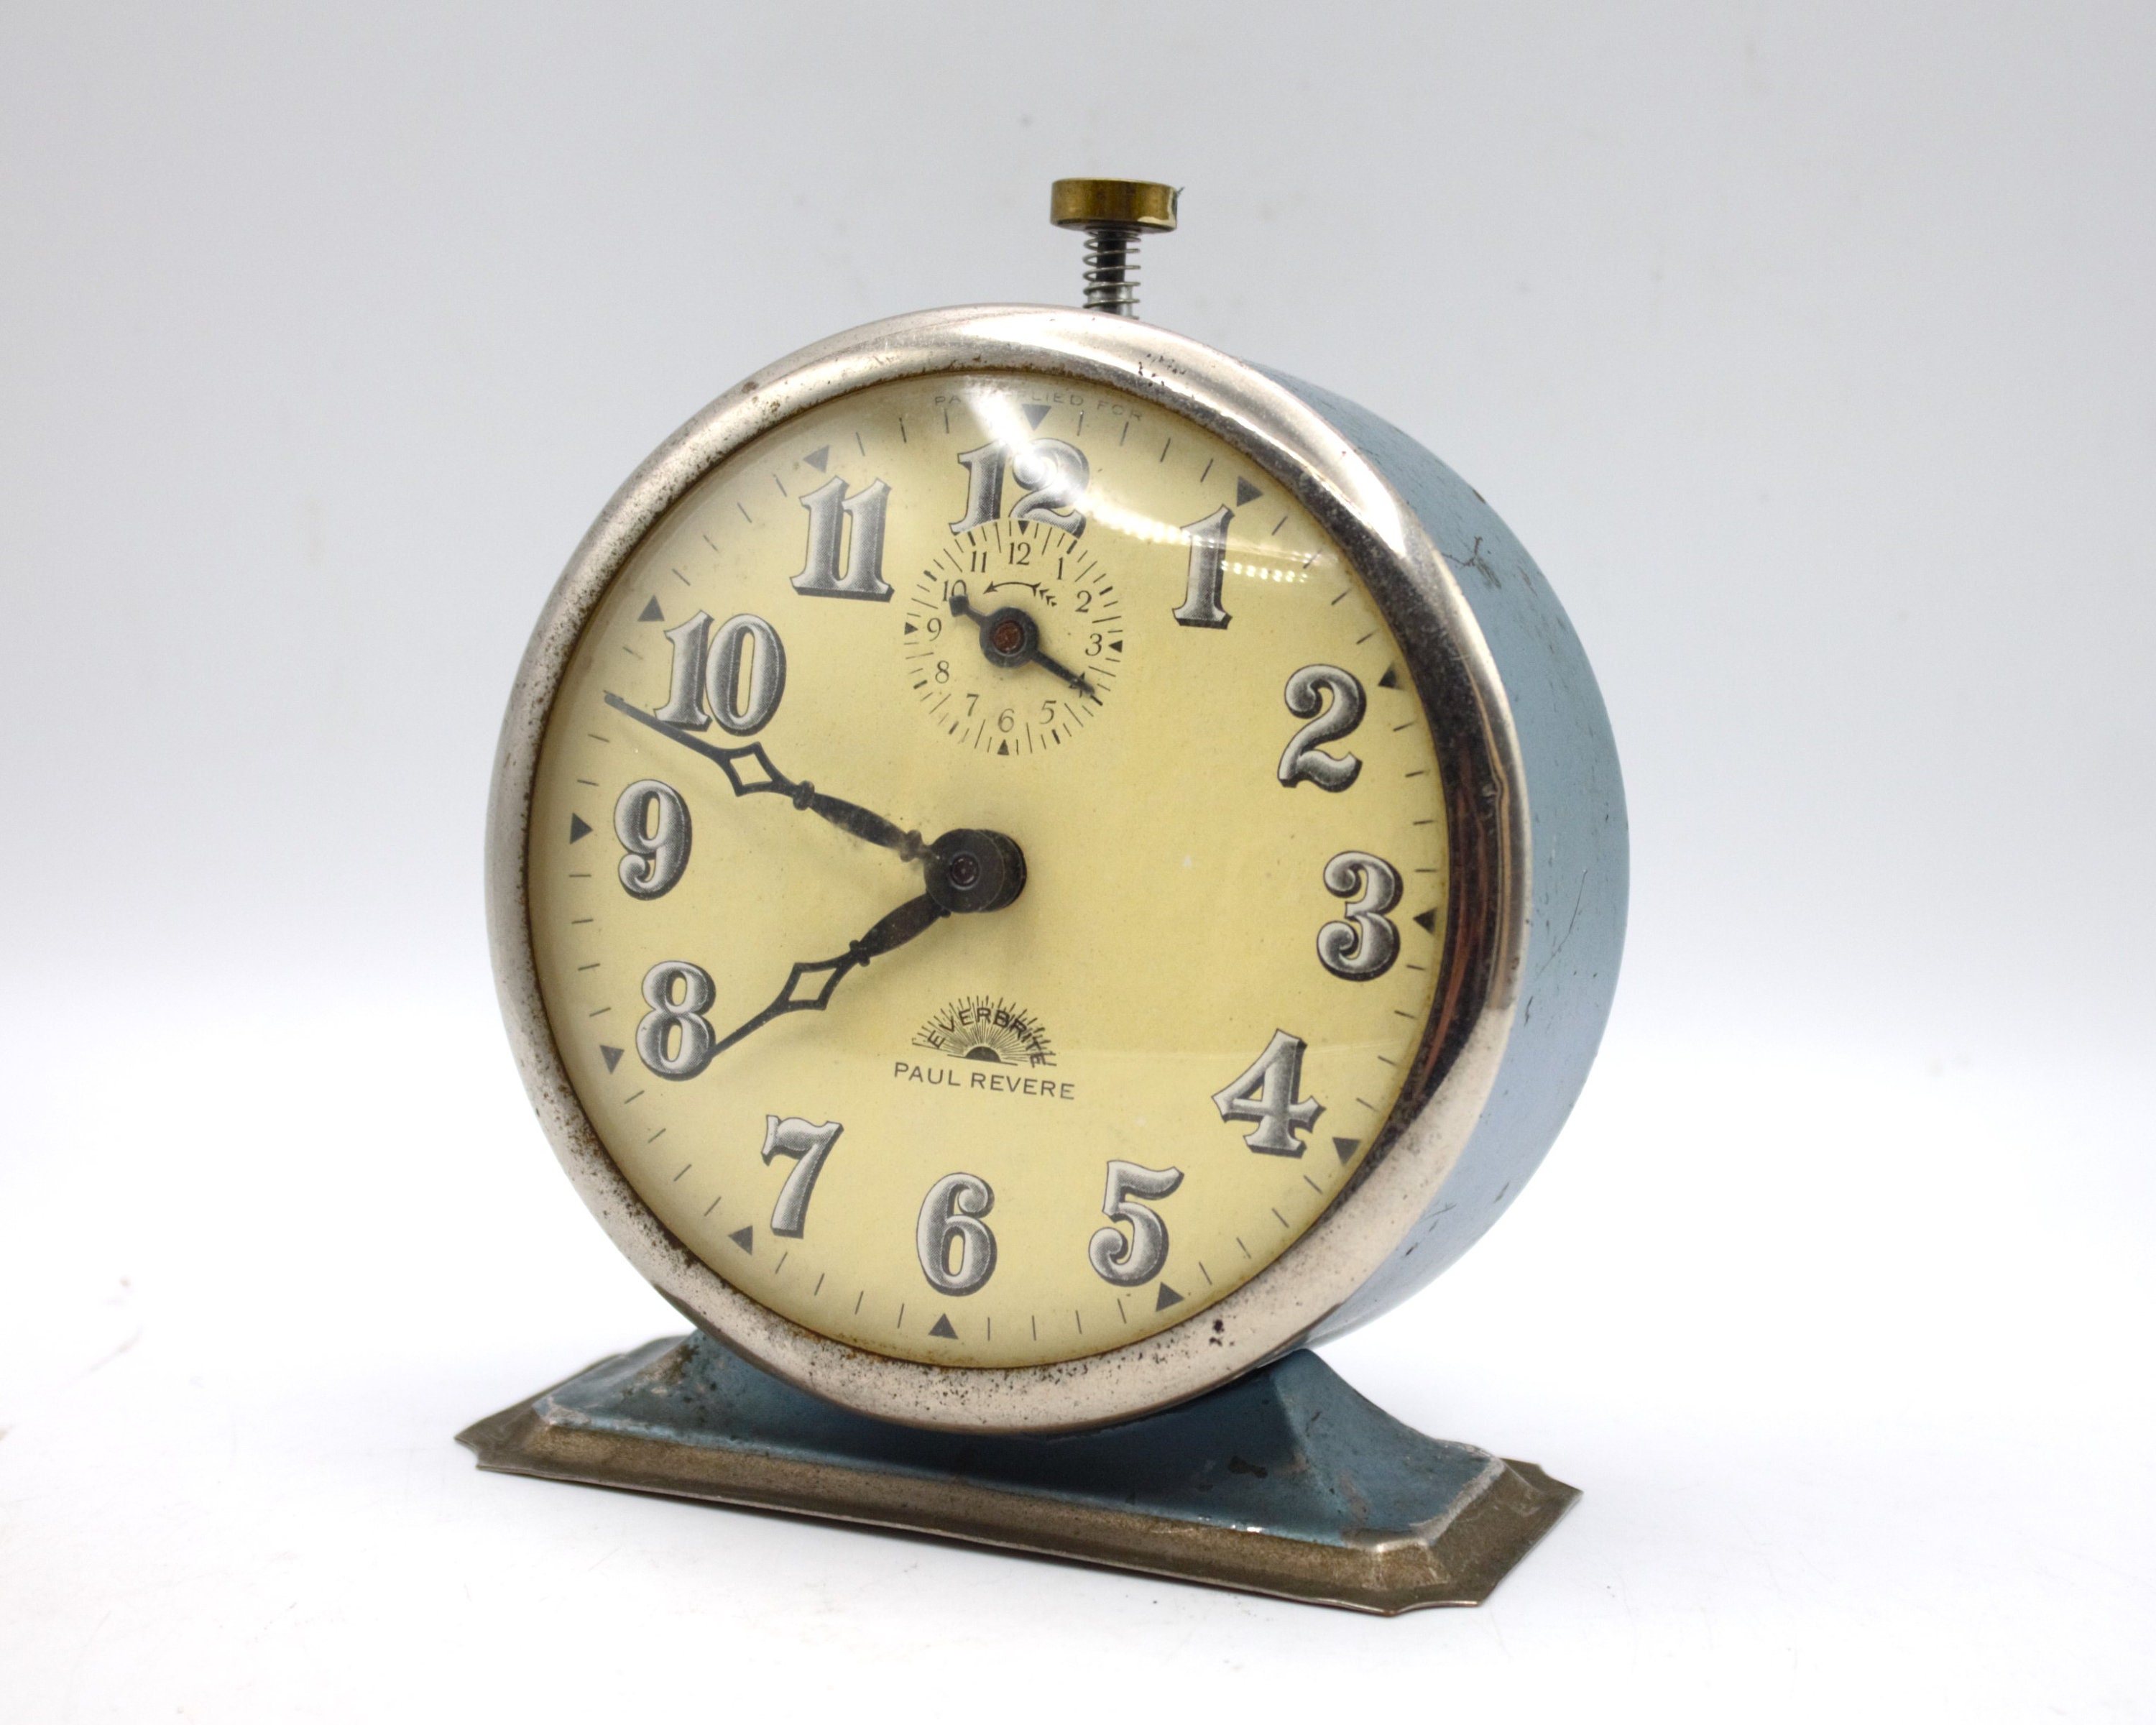 Vintage 1930s Paul Revere Alarm Clock Blue Metal and Chrome Art Deco Design  Mechanical Gear Spring Wound Bell Ringer Everbrite Dial Serviced -   Sweden